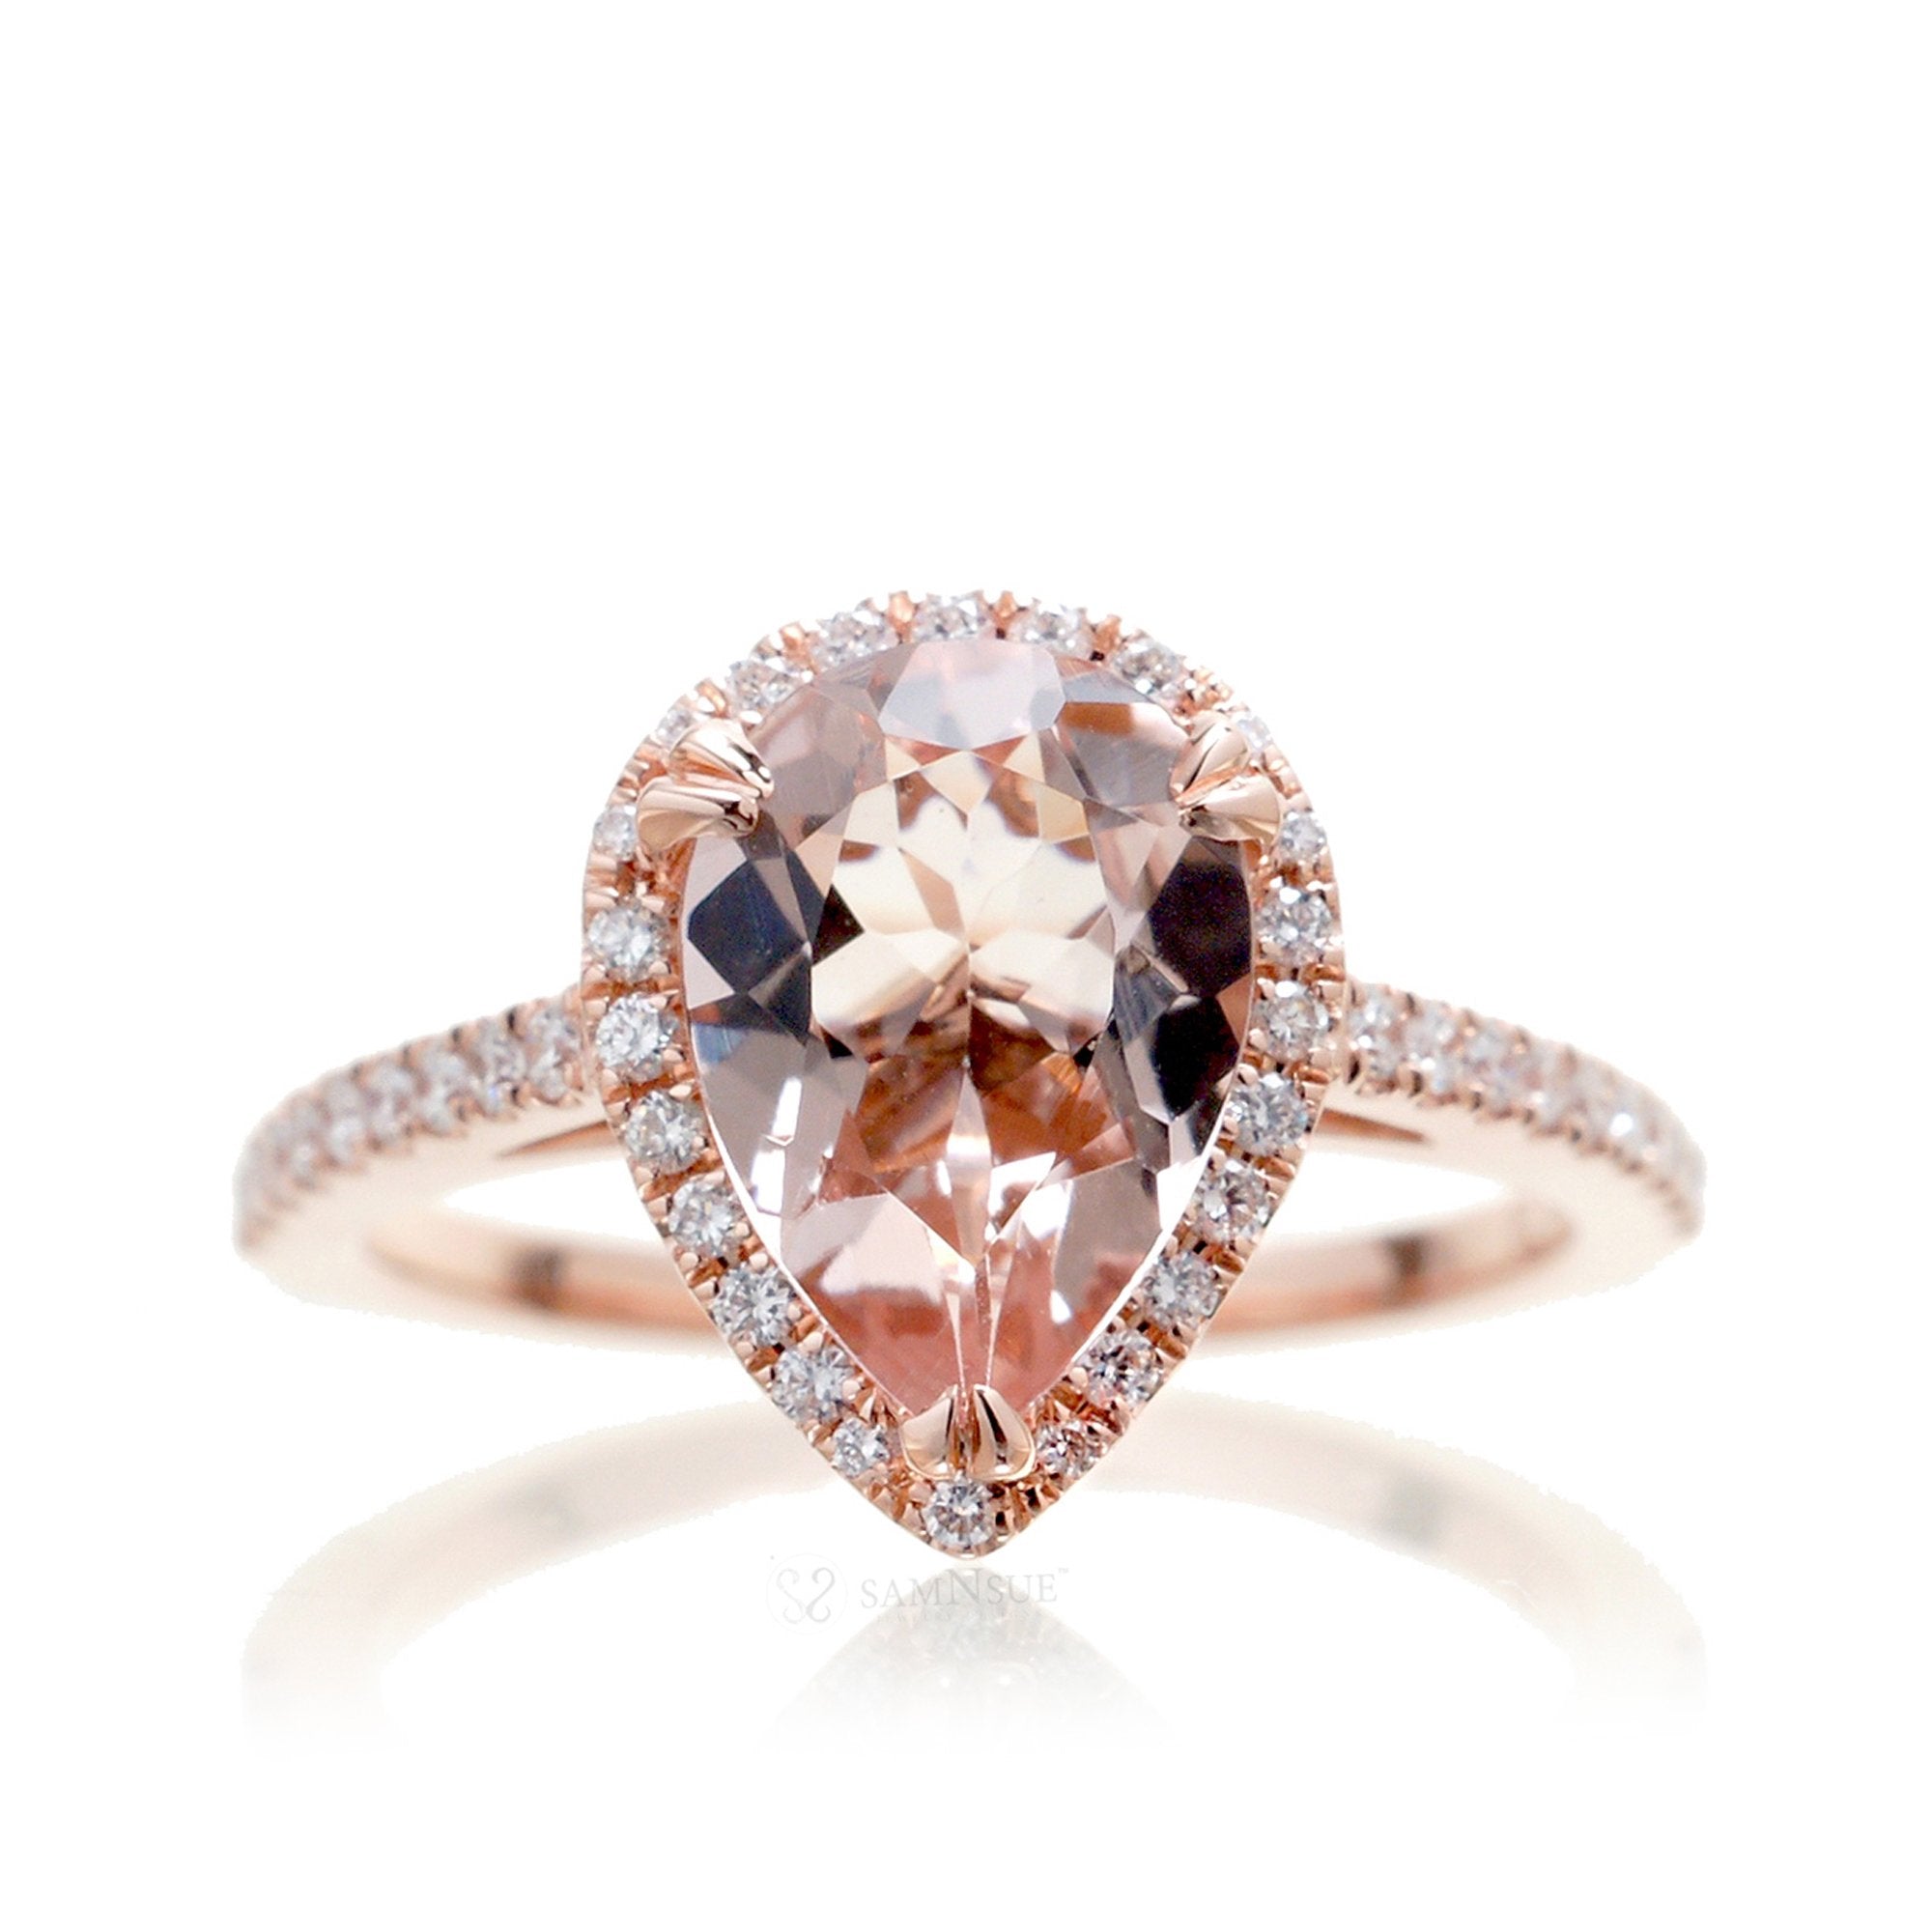 Pear morganite diamond halo ring in rose gold - the Signature